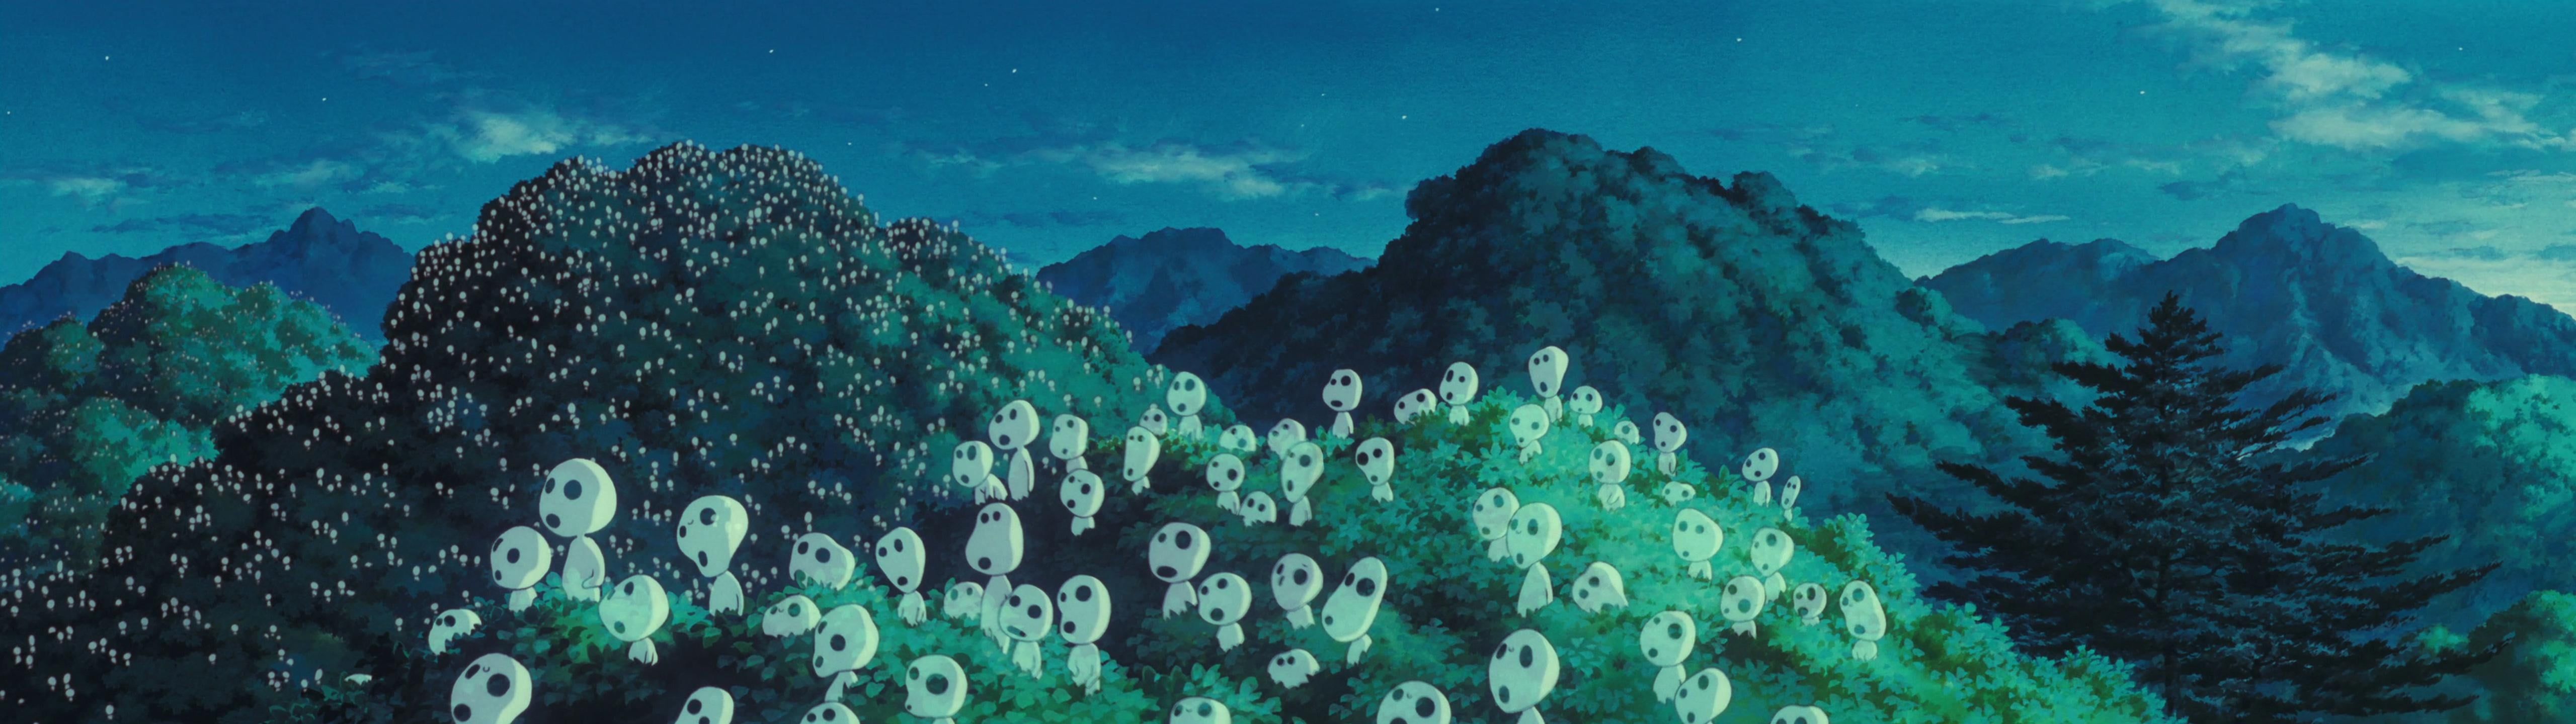 Ultra Wide Studio Ghibli wallpaper